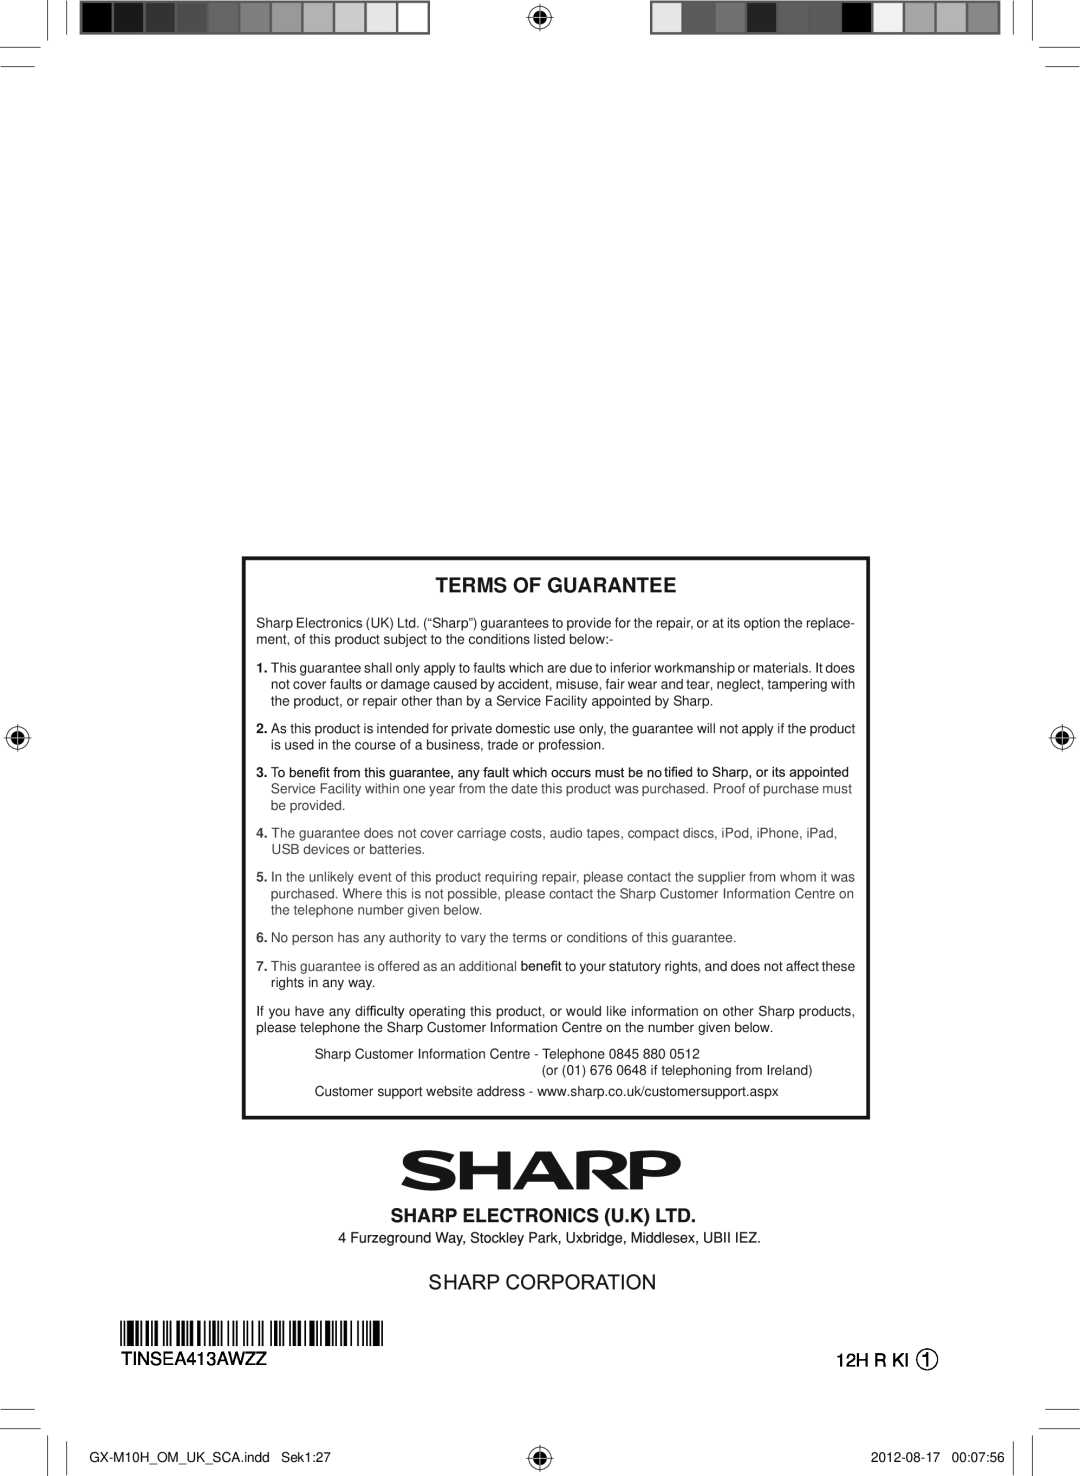 Sharp GX-M10H(OR), GX-M10H(RD) operation manual TINSEA413AWZZO8, Terms Of Guarantee, 12H R KI 